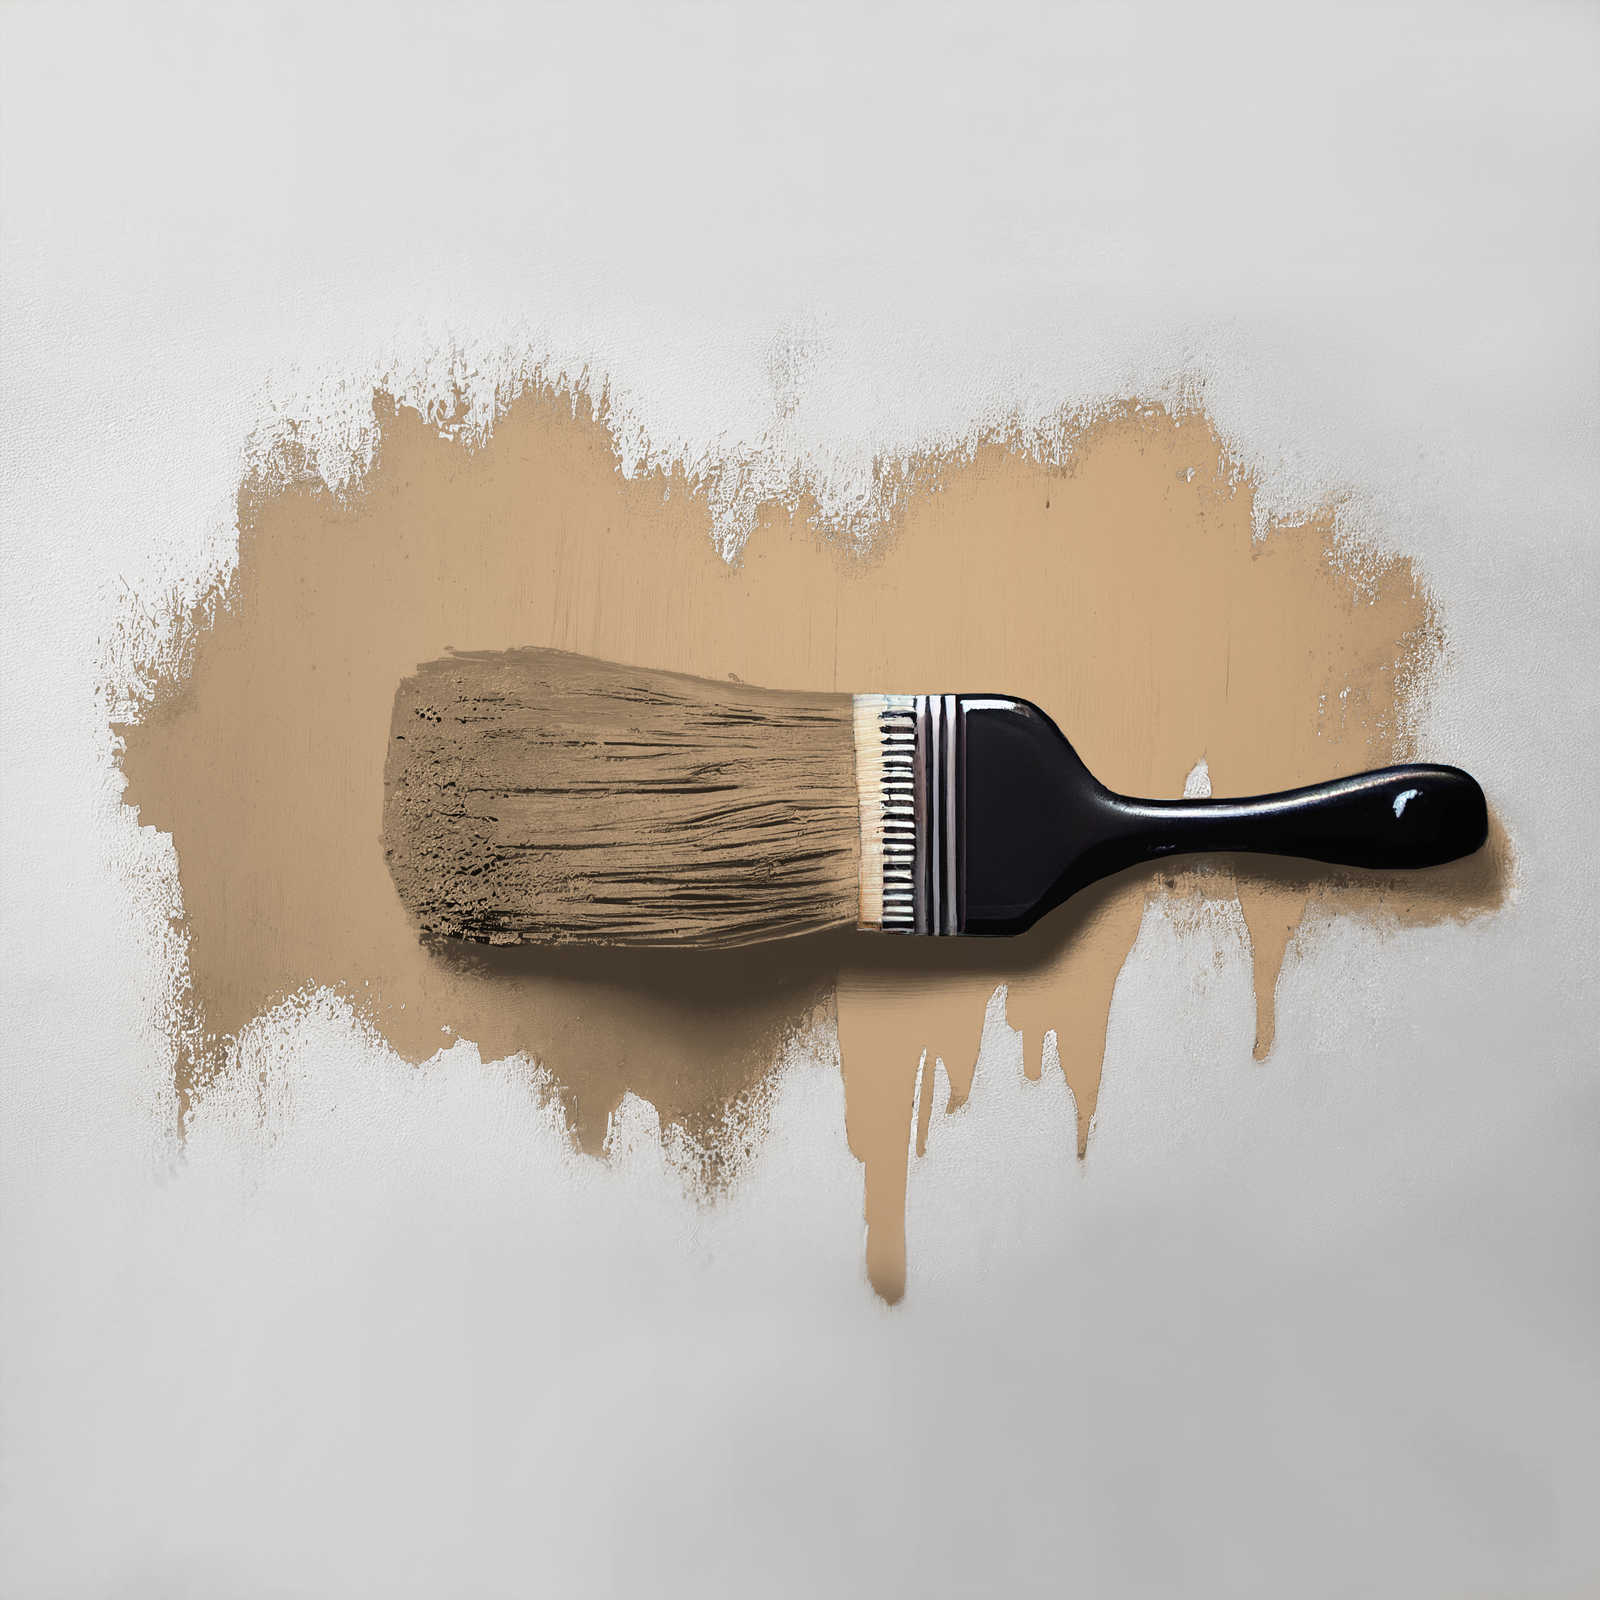             Pittura murale TCK6004 »Active Almond« in accogliente beige marrone – 5,0 litri
        